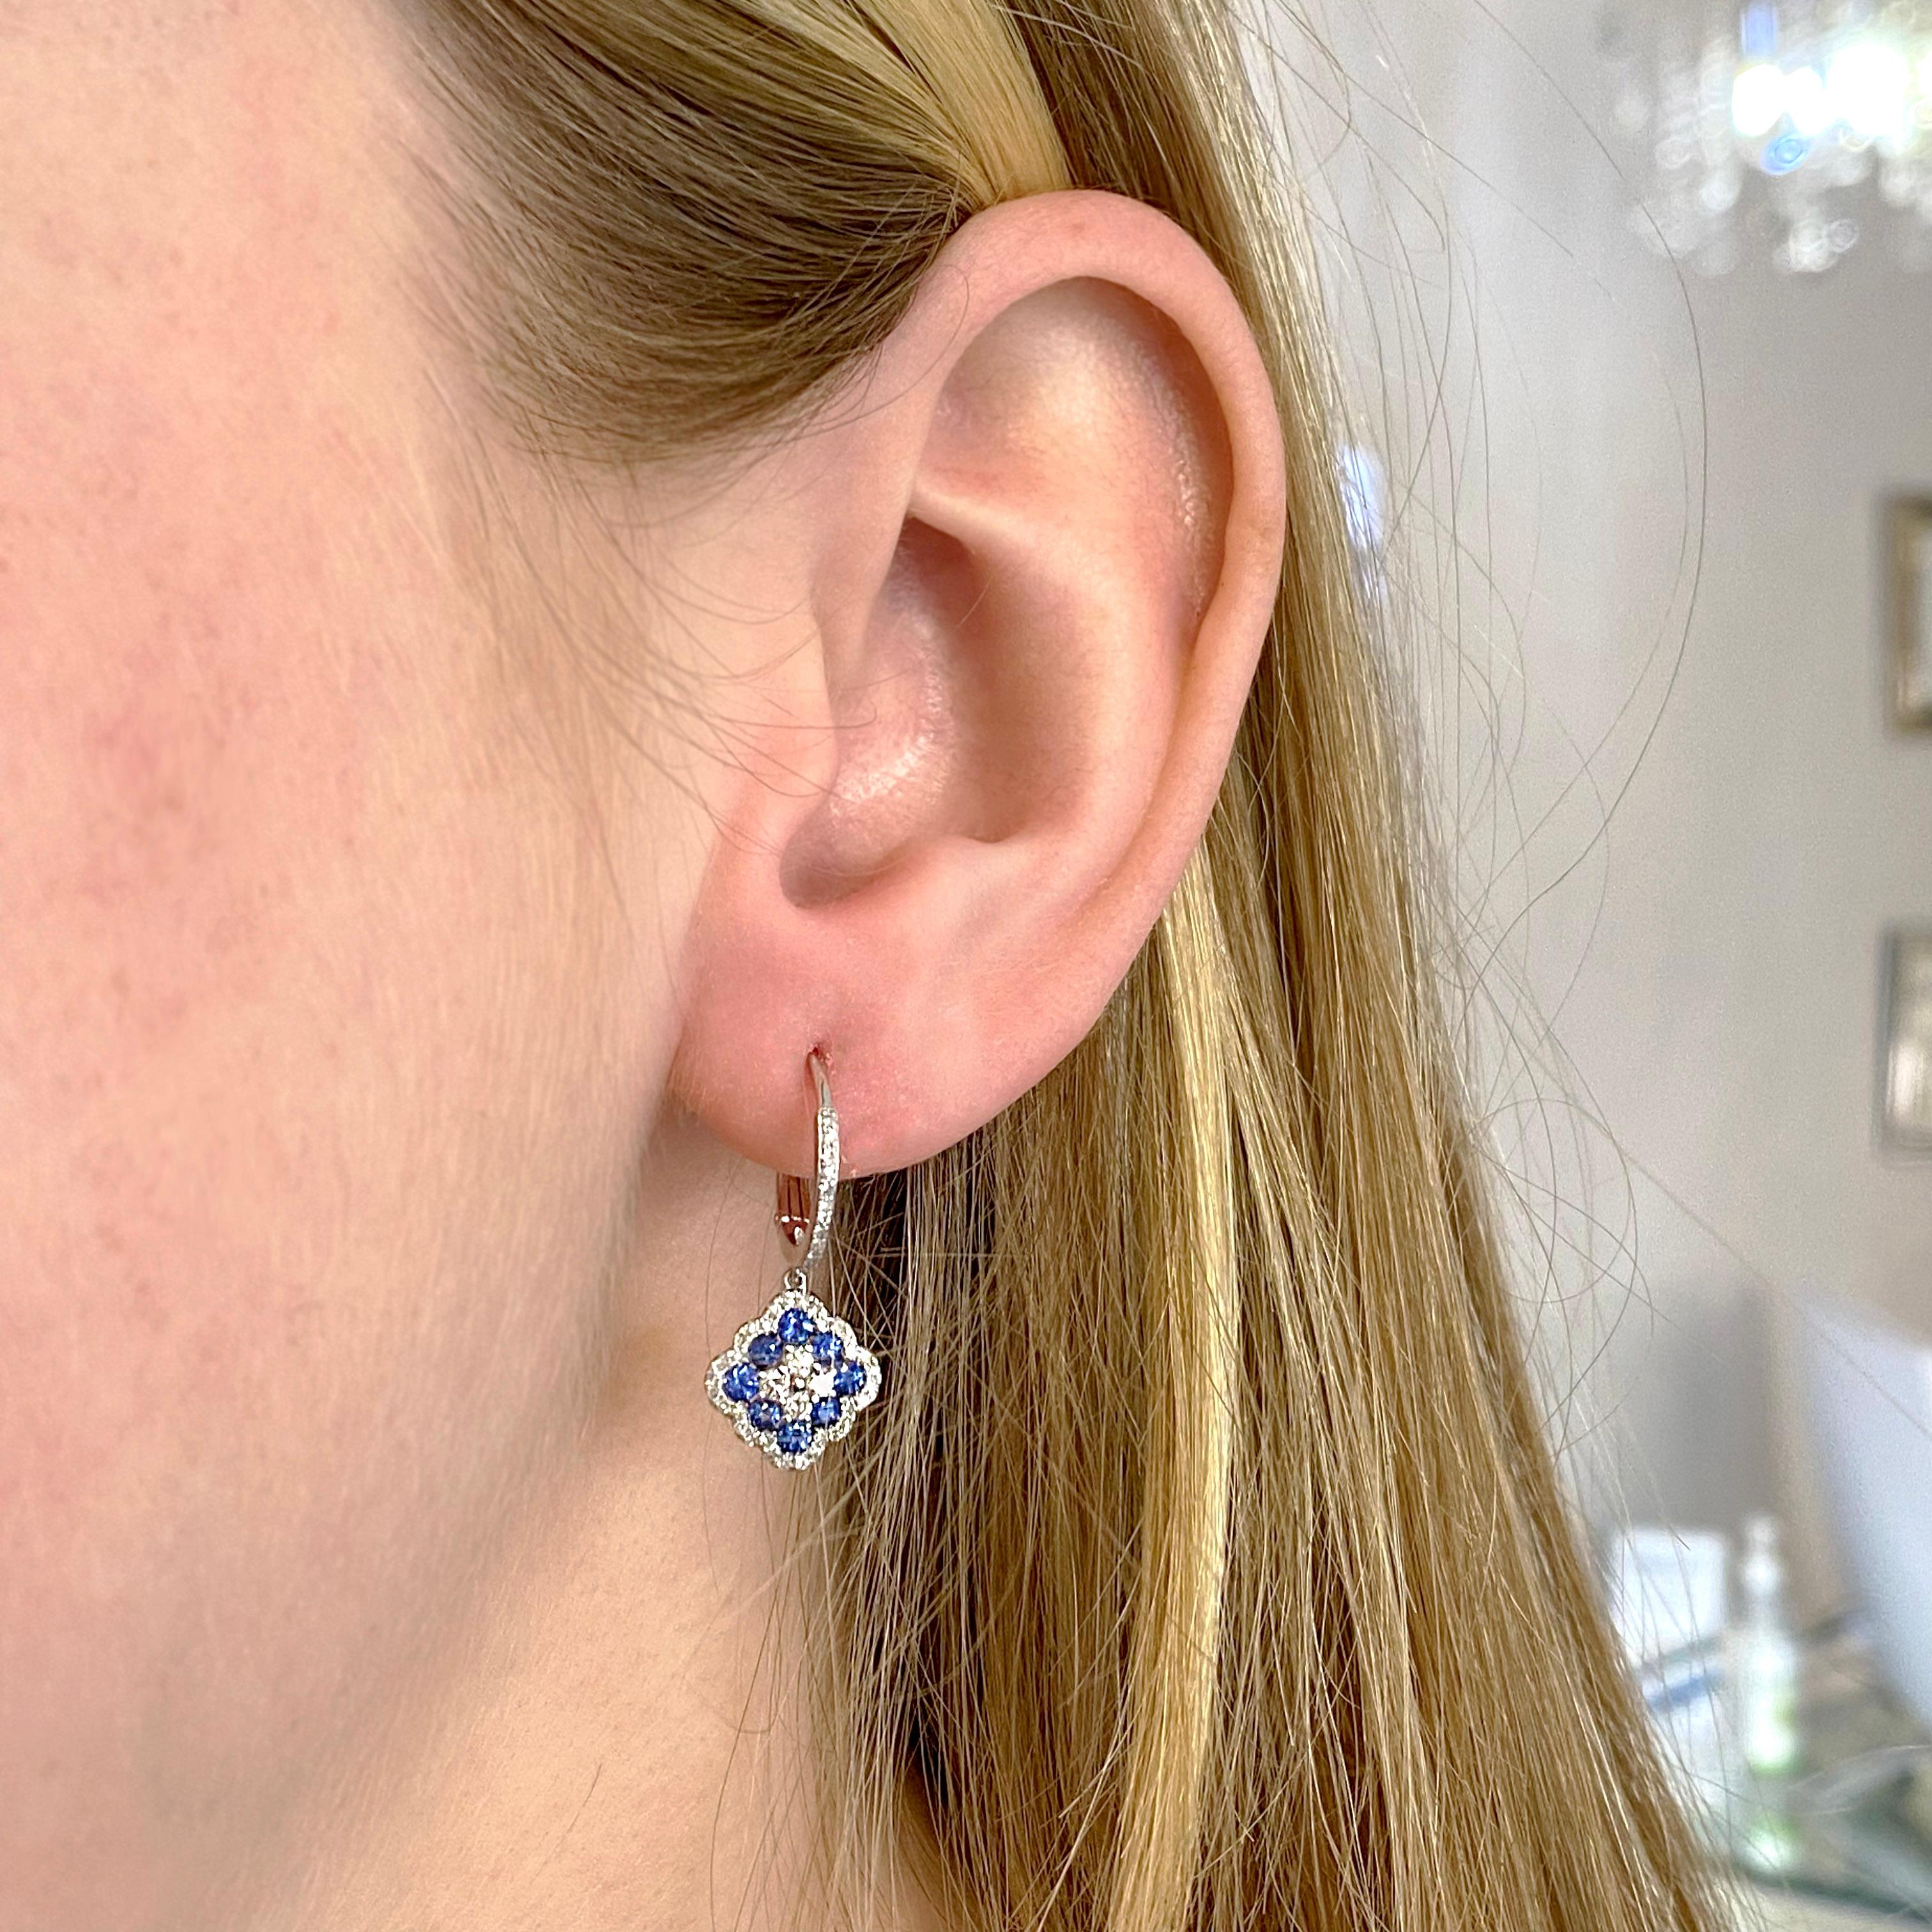 Earrings: 1 Set
Metal Quality: 14 karat White Gold
Earring Type: Dangle
Clasp Type: Lever-Back
Earring Length: 26 millimeters
Earring width: 11 millimeters 
Diamond Number: 98
Diamond Shape: Round
Total Diamond Weight: .47 Carat
Gemstone: